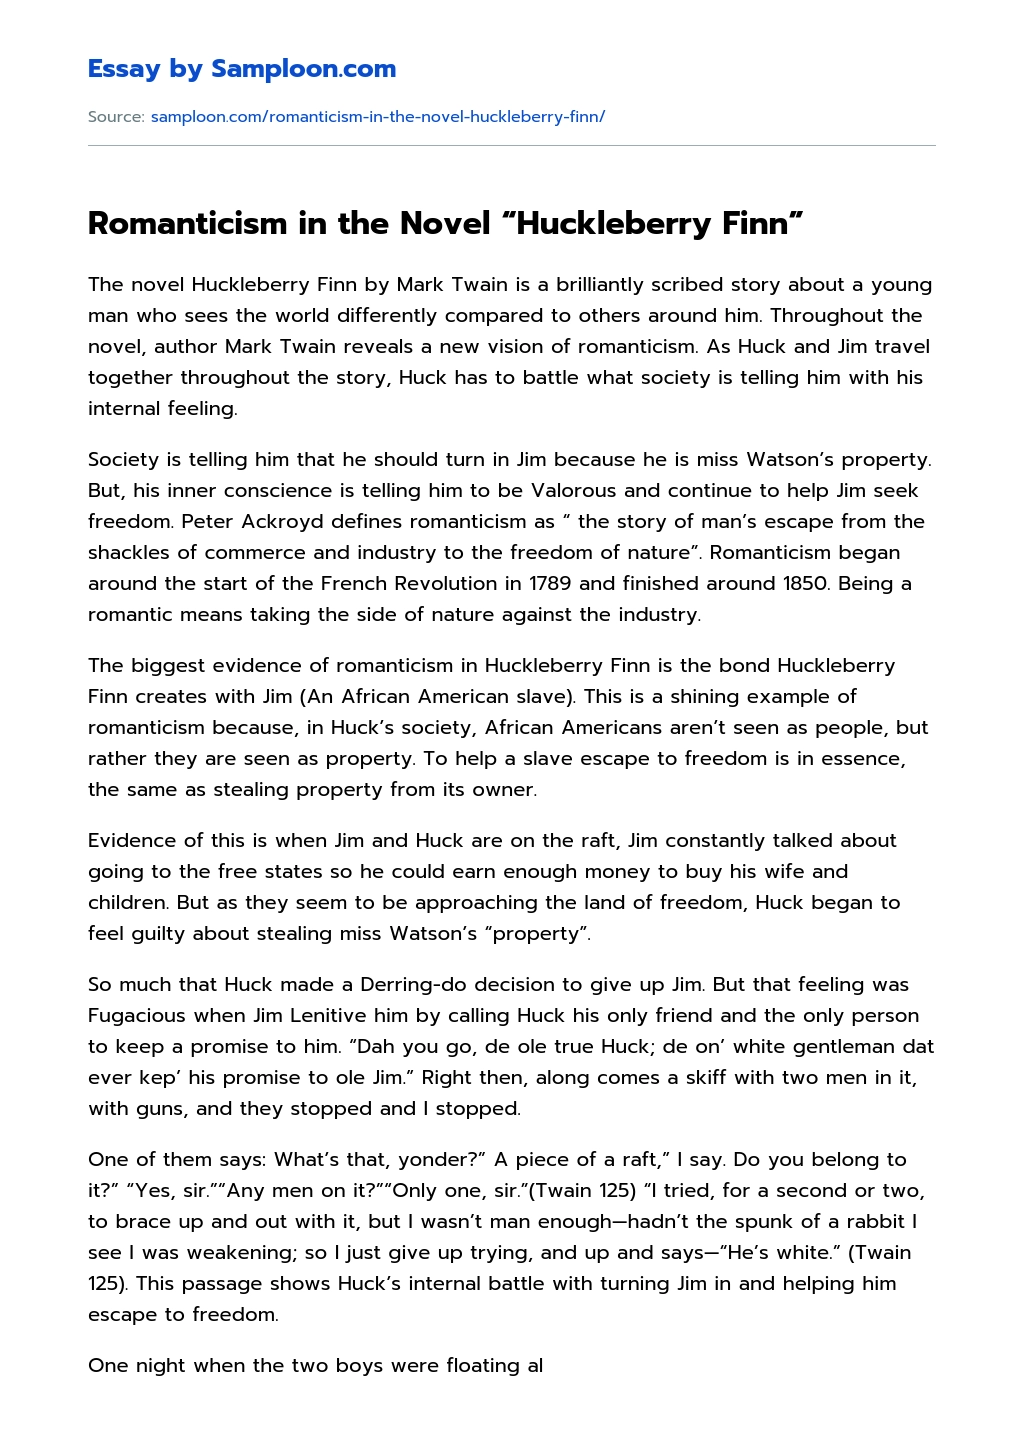 Romanticism in the Novel “Huckleberry Finn” essay